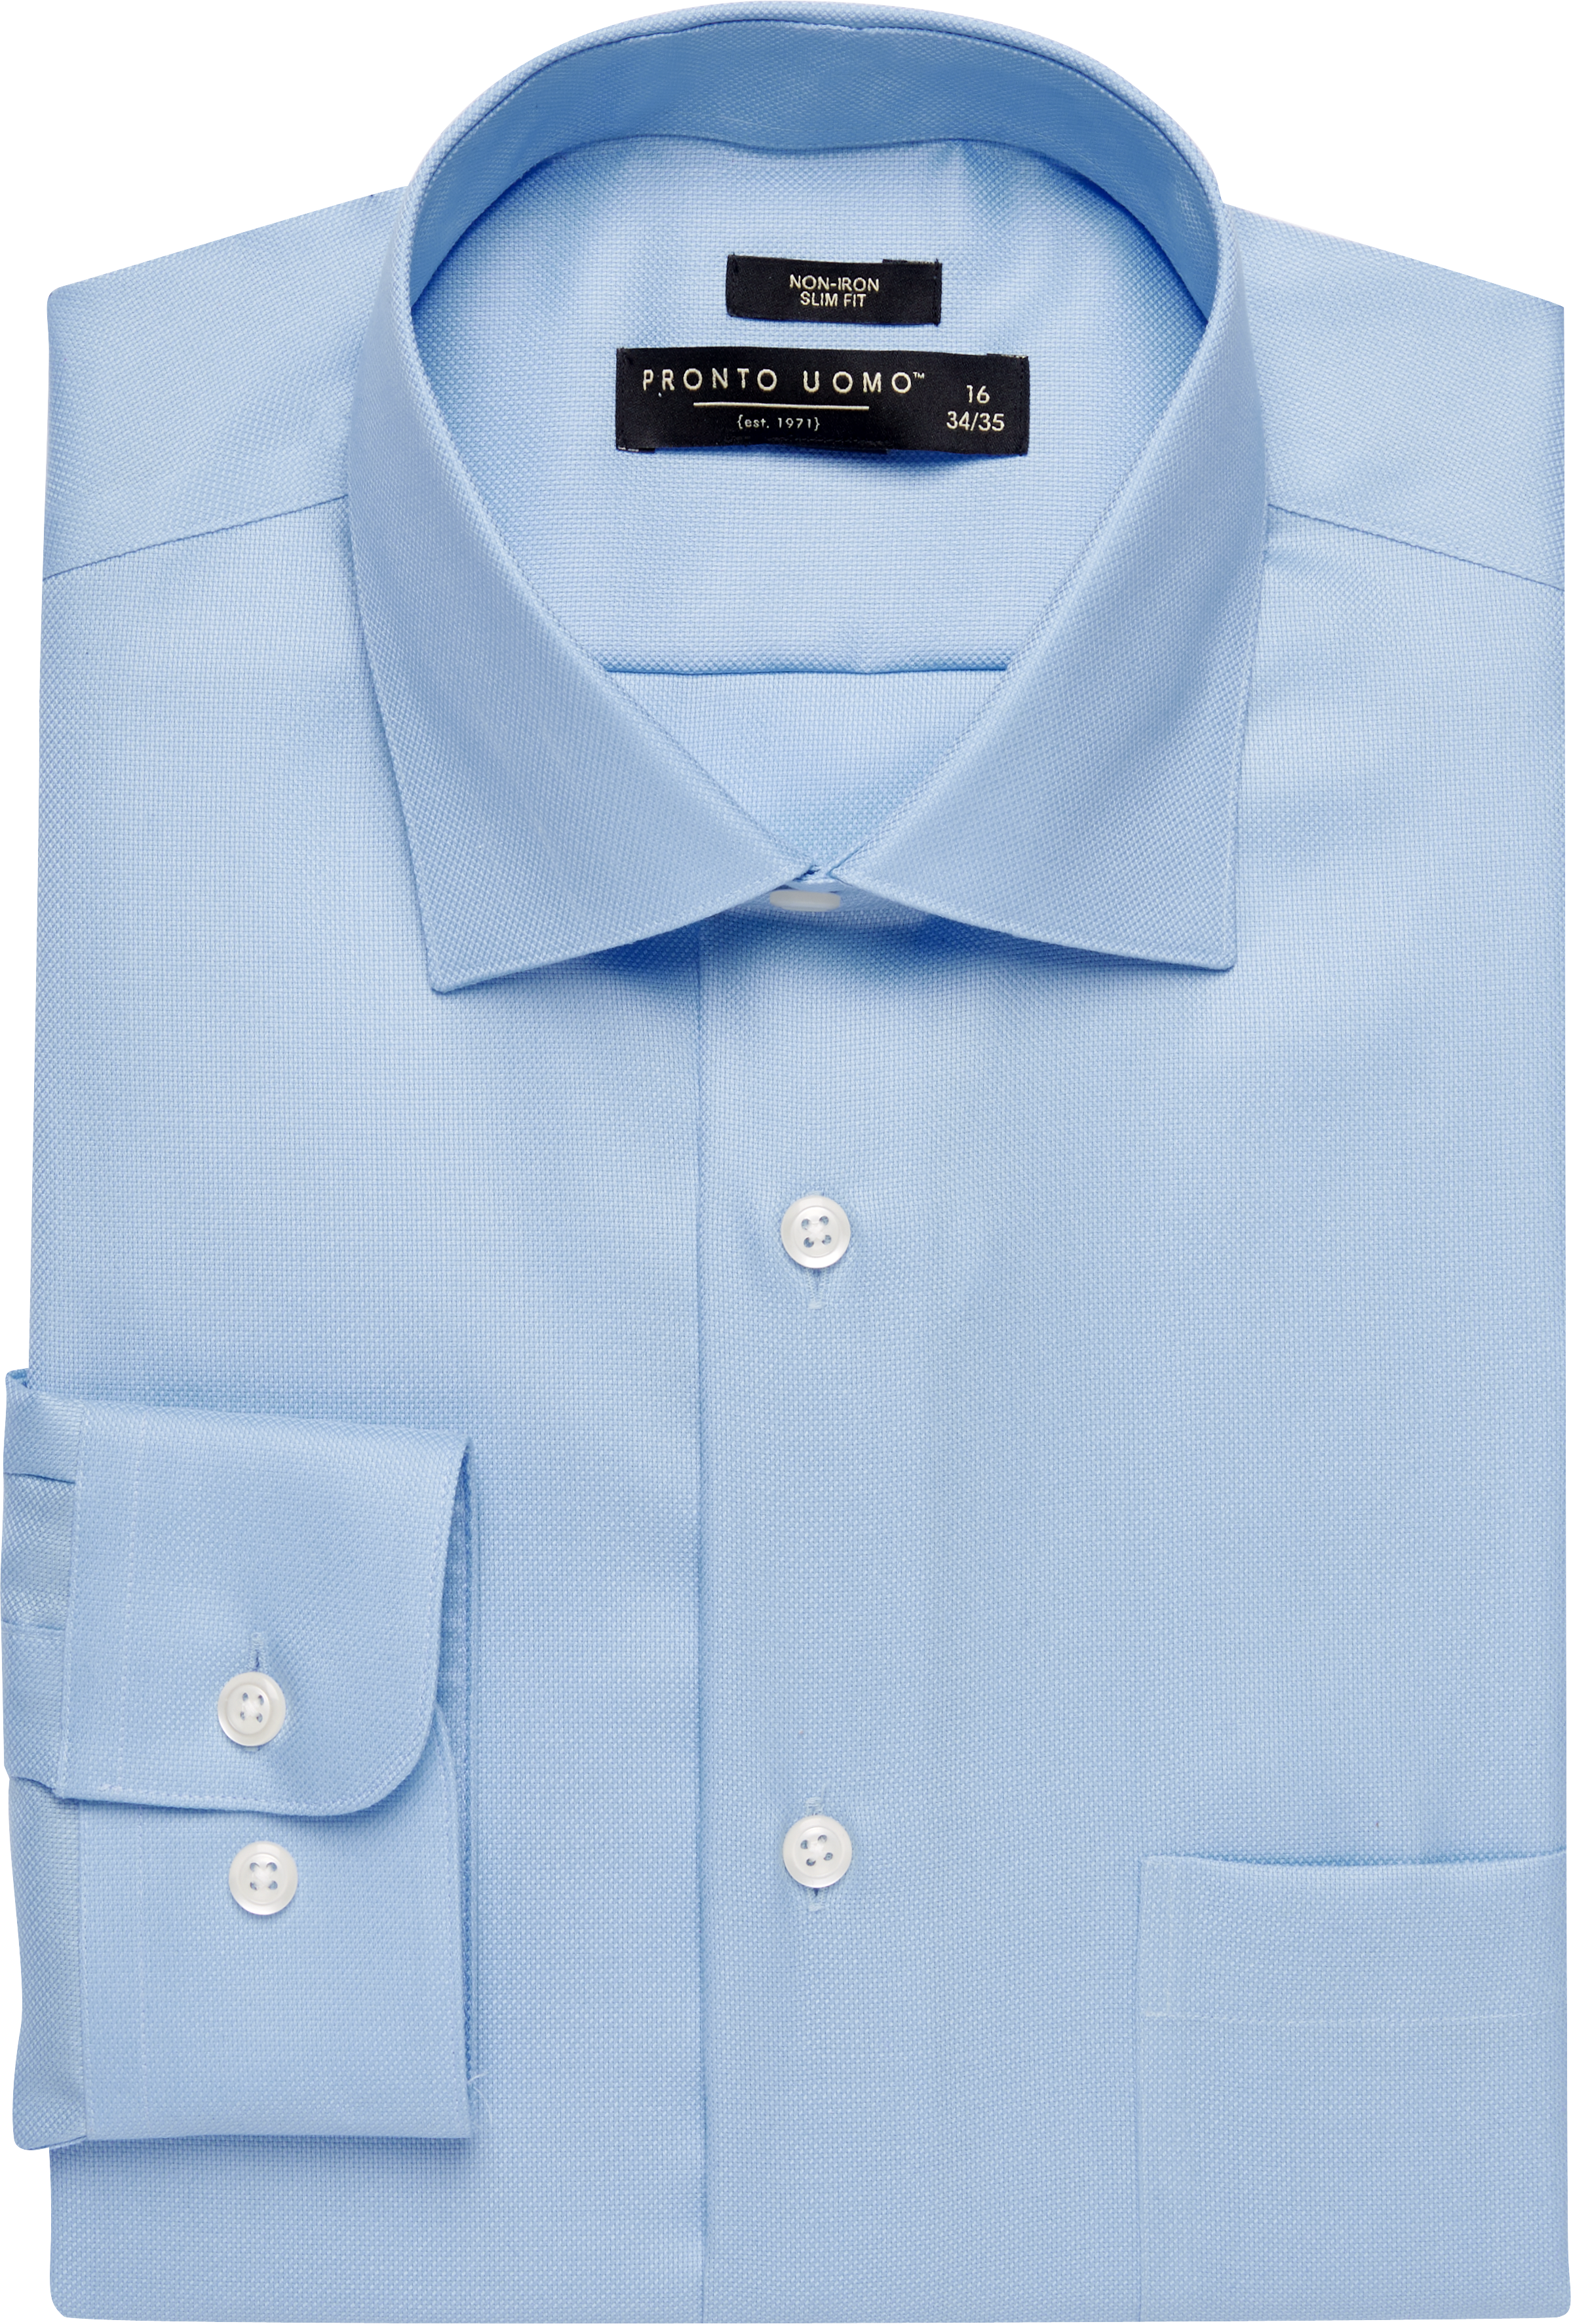 Pronto Uomo Slim Fit Queen's Dress Shirt, Light Blue - Men's Featured | Men's